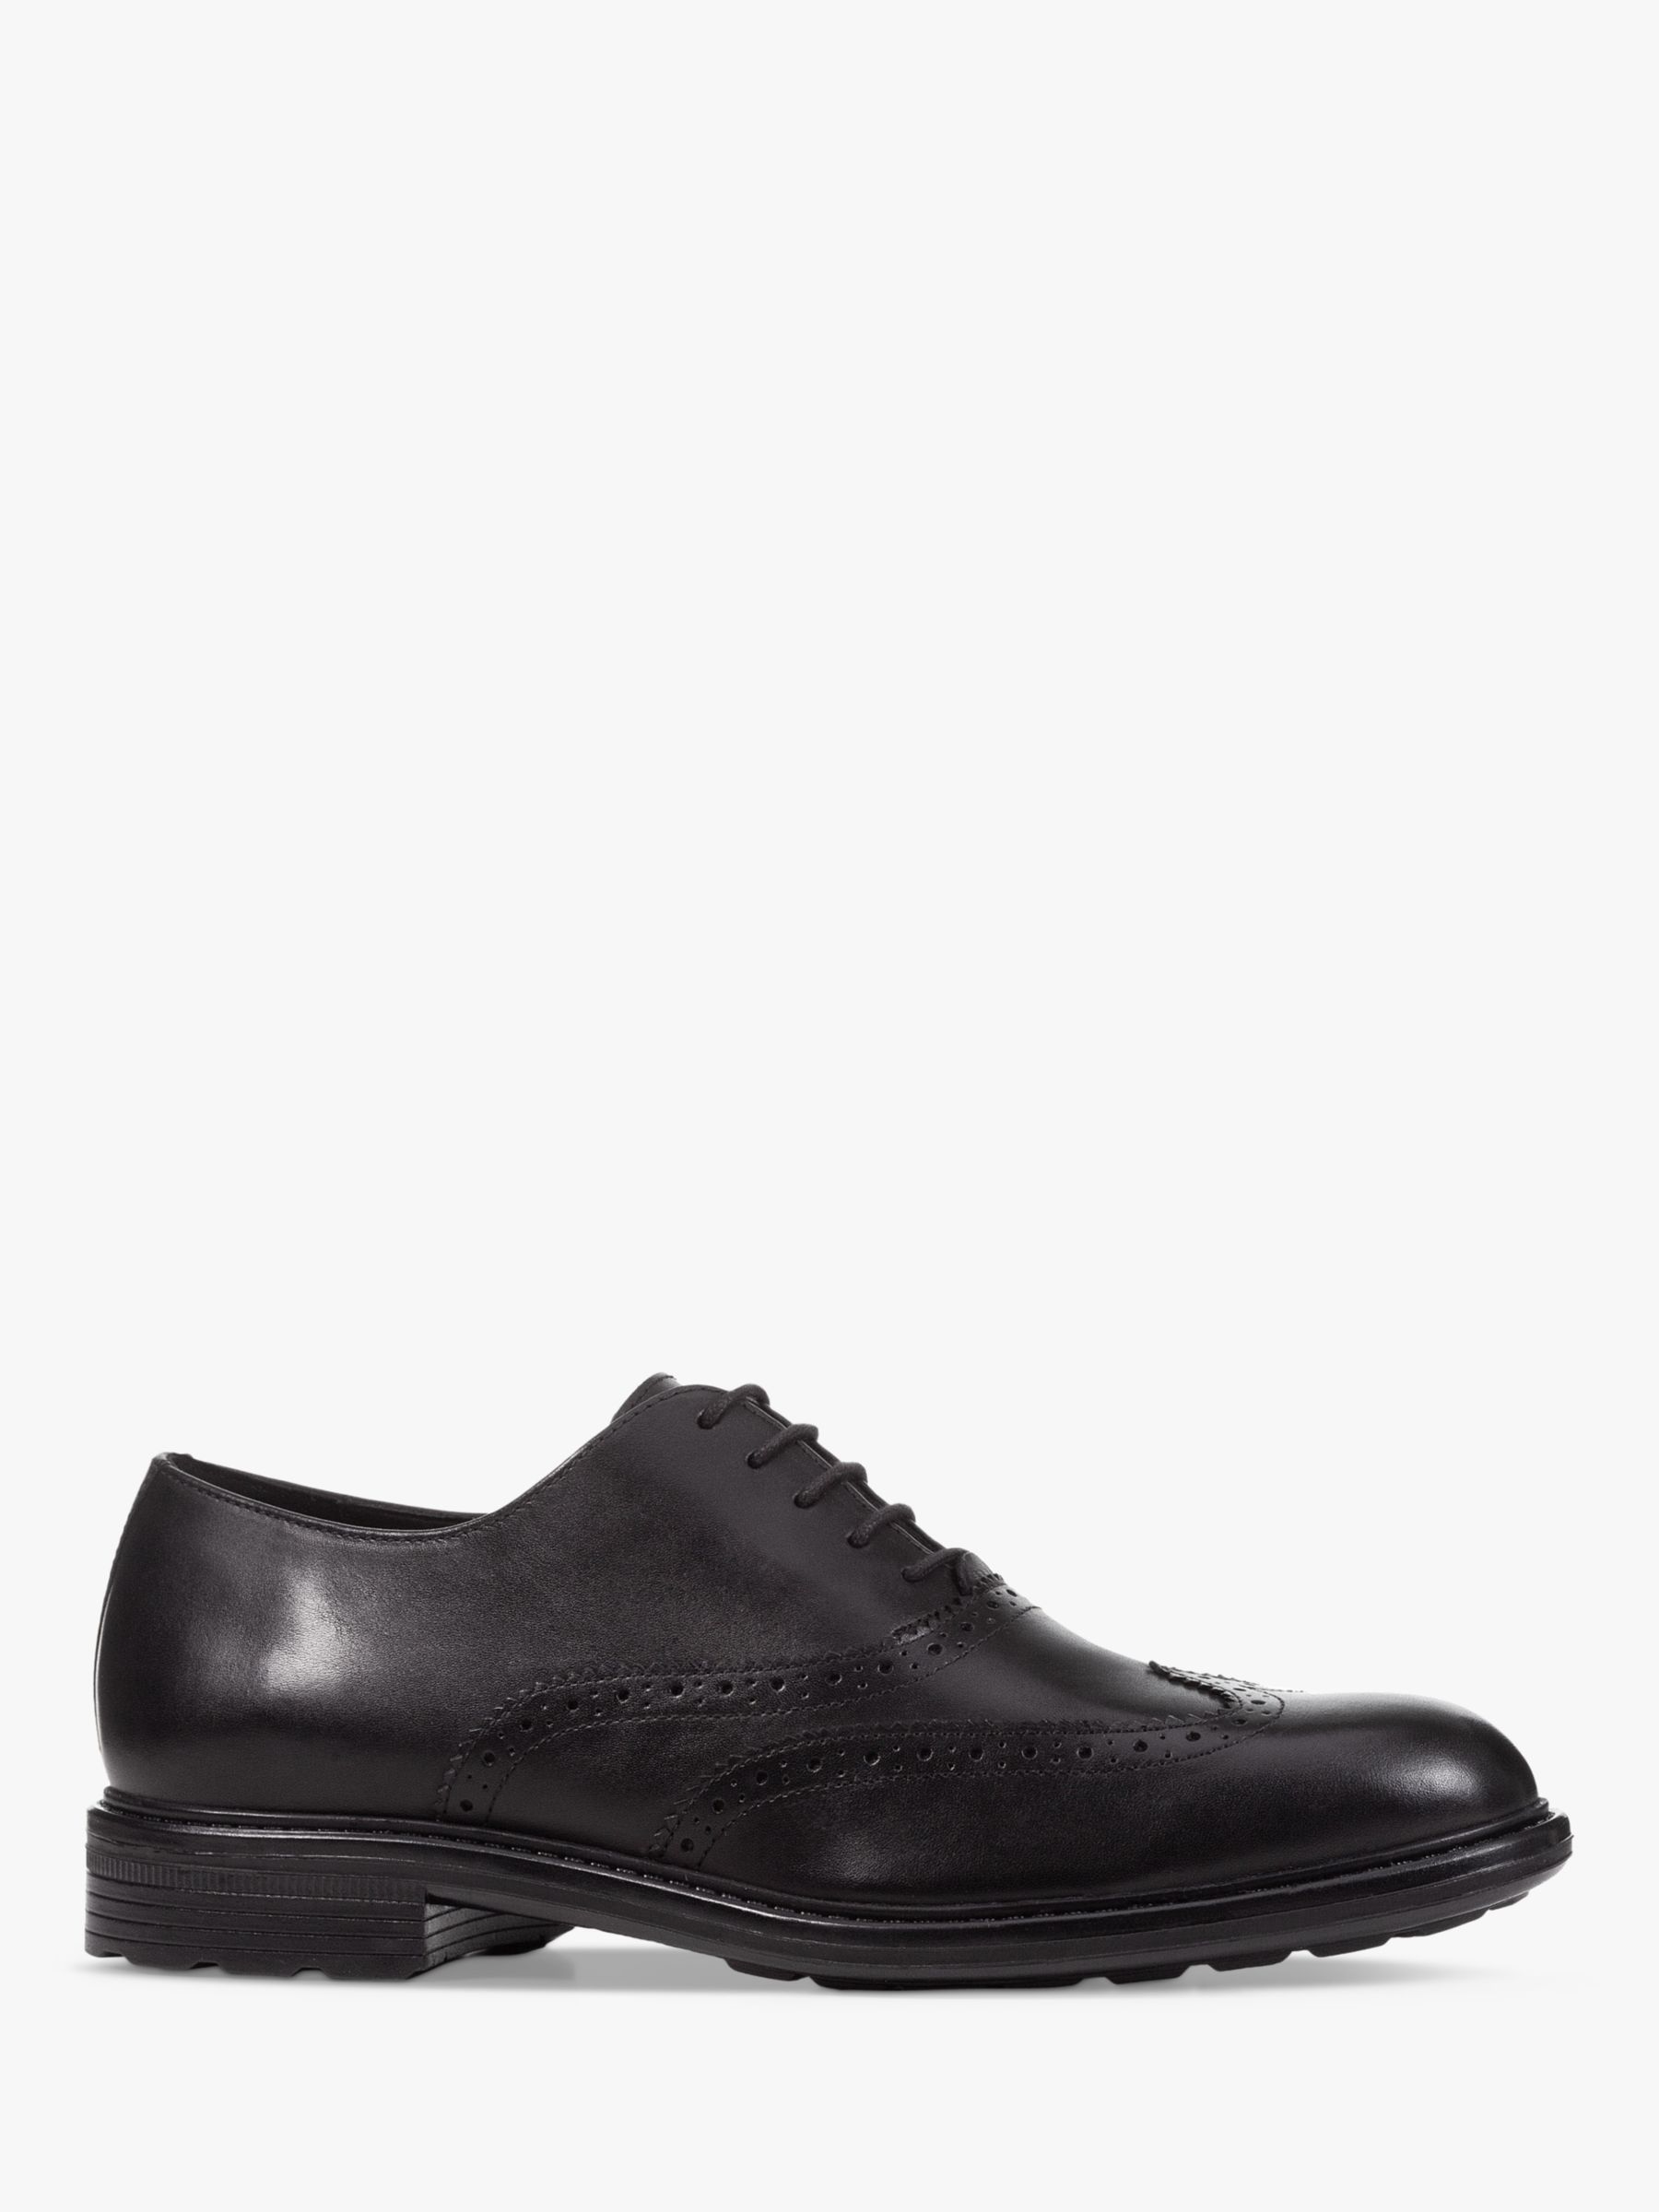 Geox Walk Pleasure Leather Brogue Shoes, Black at John Lewis & Partners